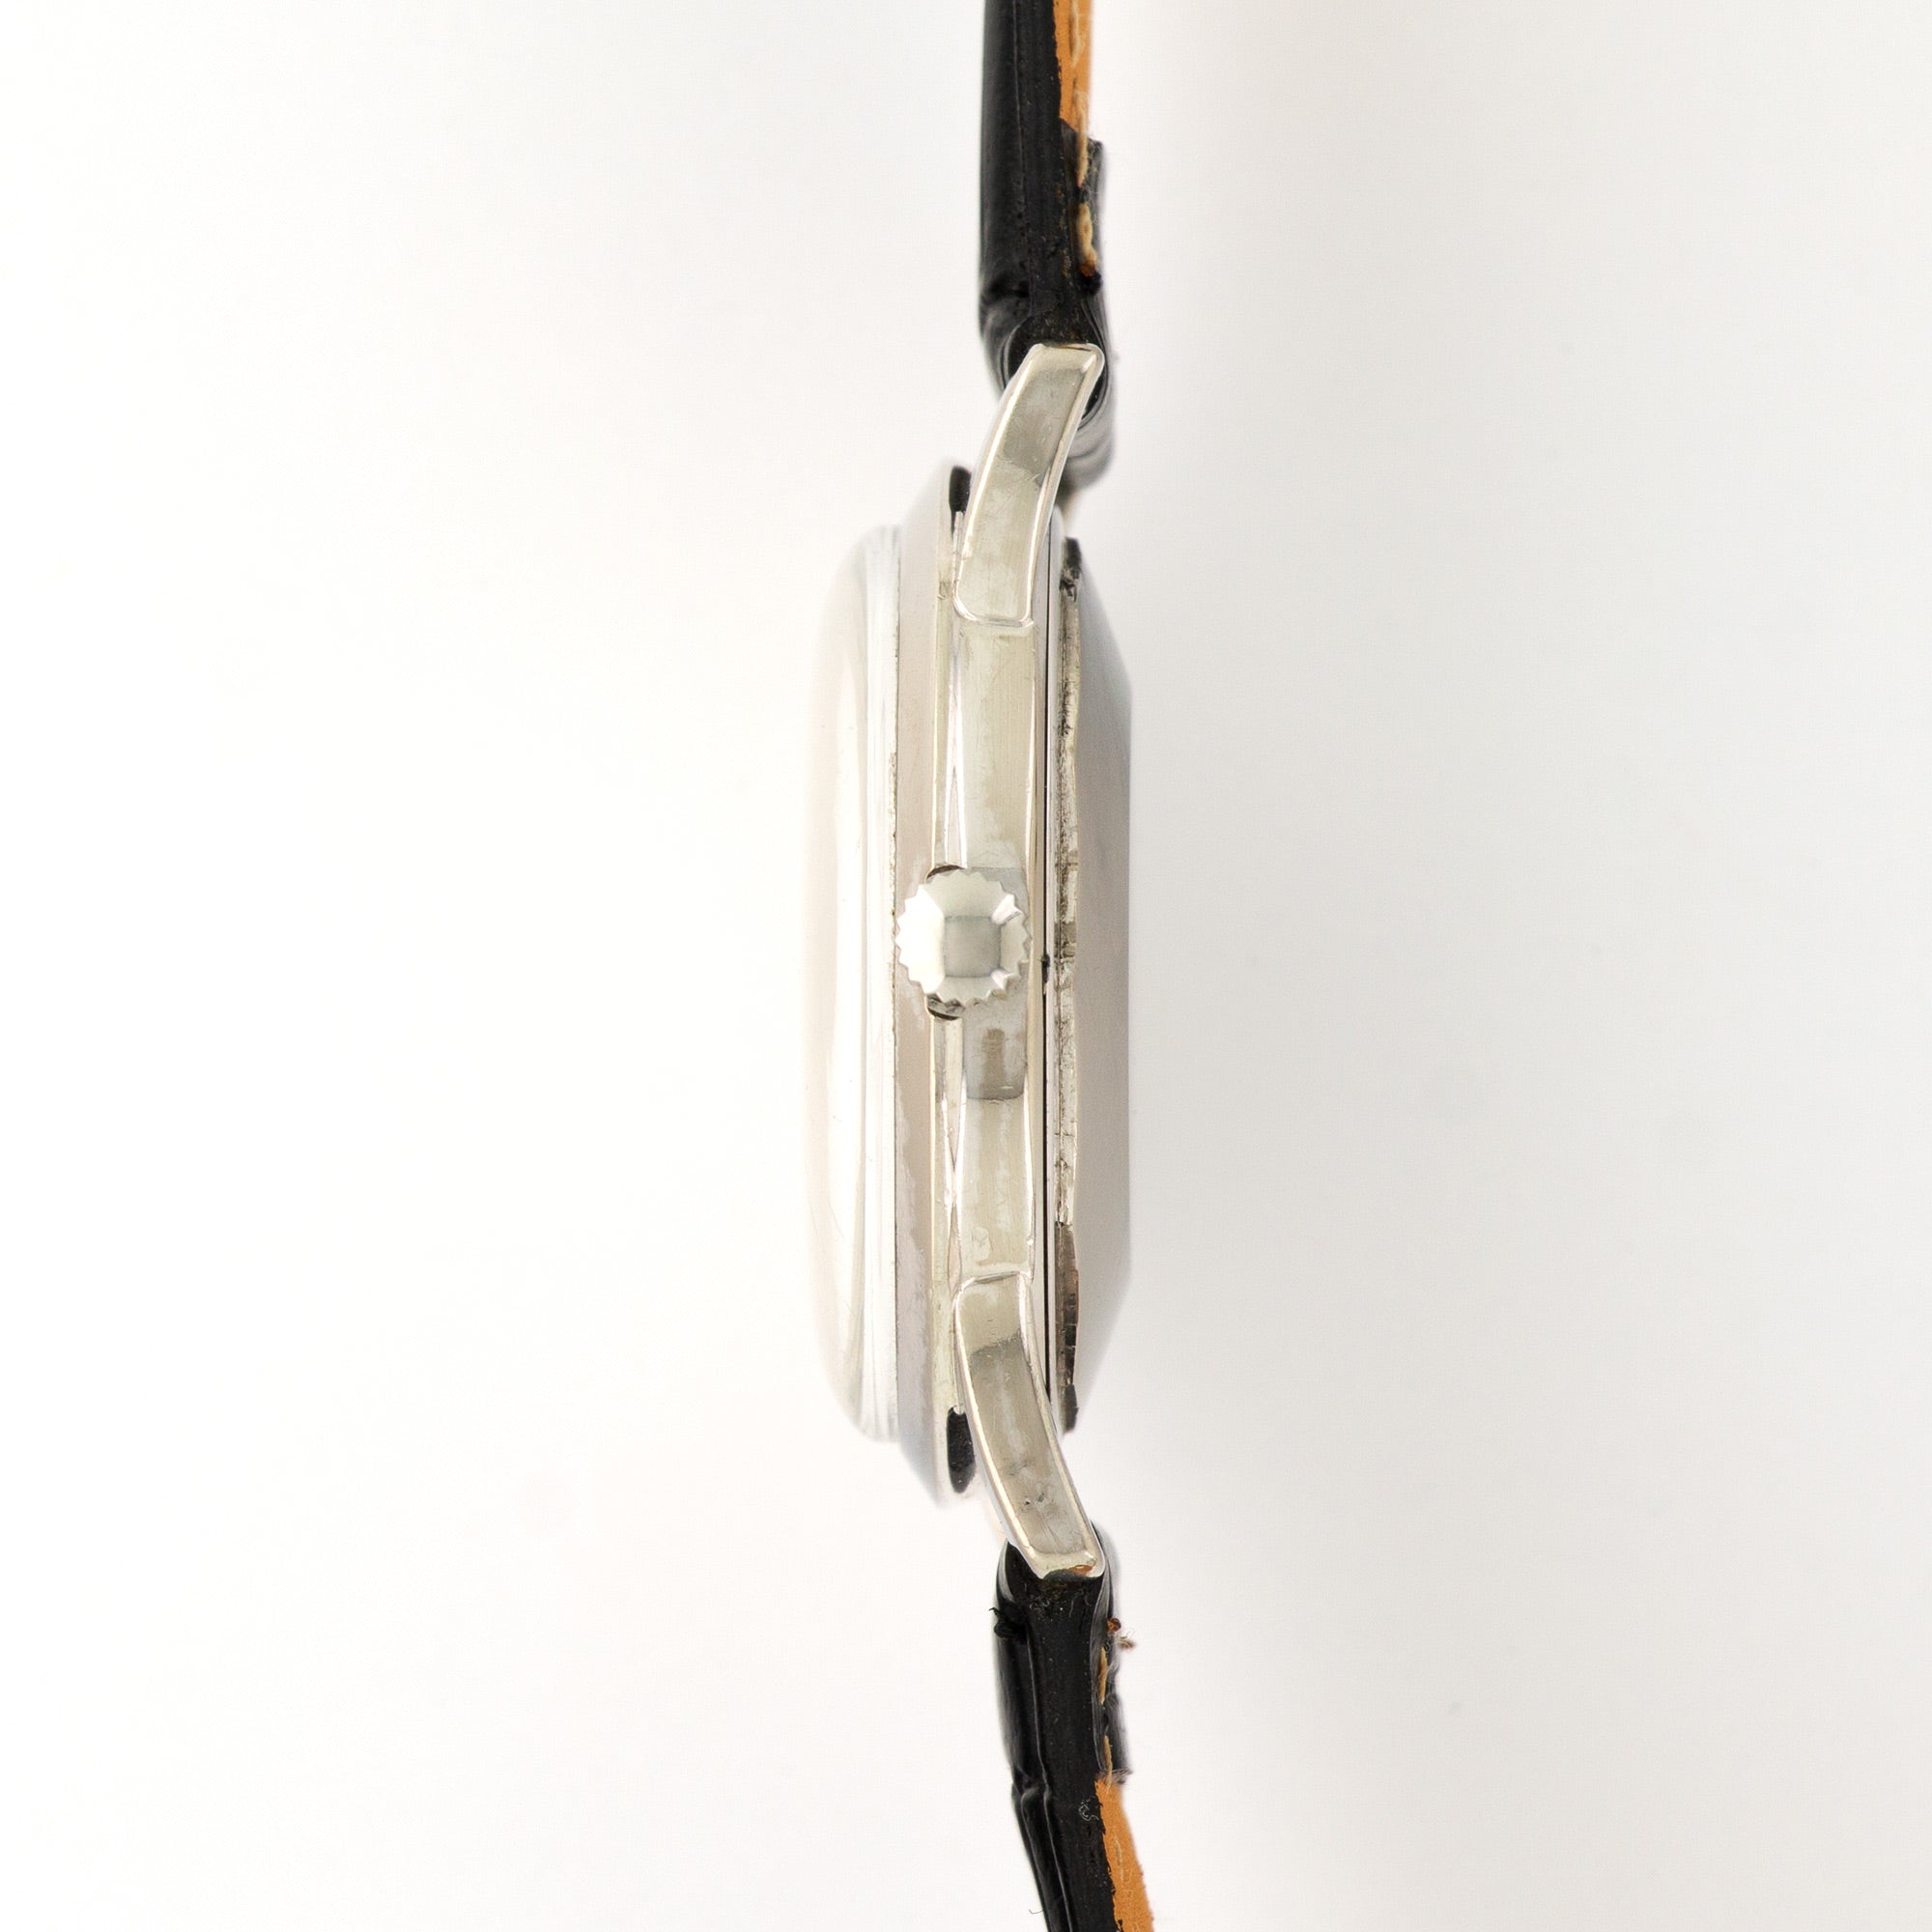 Vacheron Constantin - Vacheron Constantin White Gold Automatic Watch Ref. 63780 - The Keystone Watches